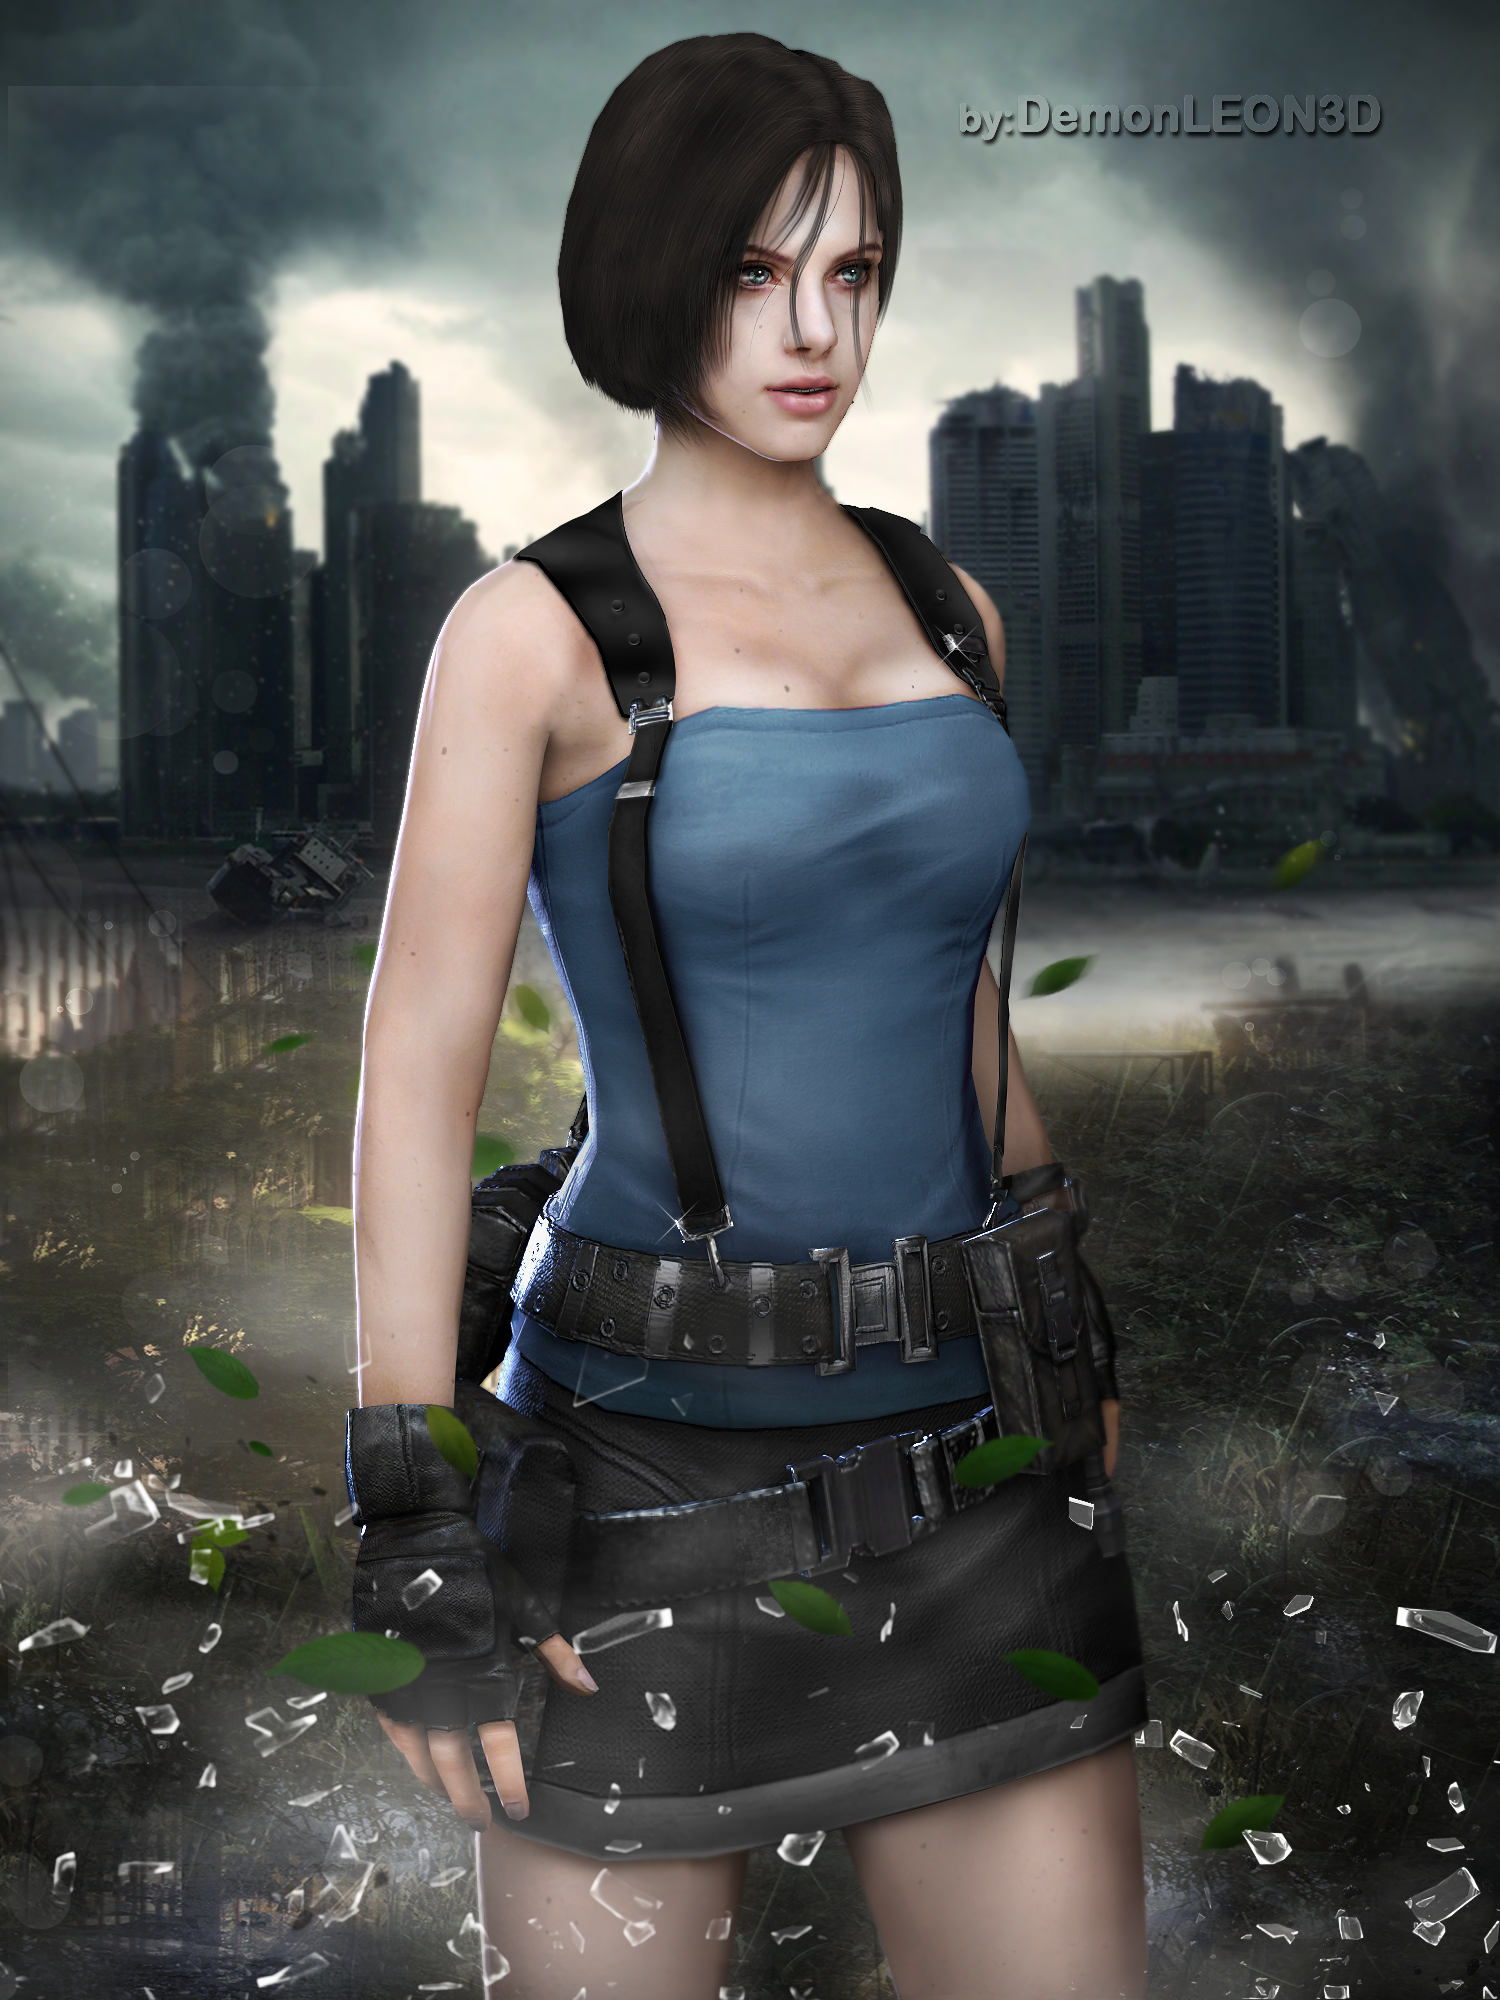 Jill Valentine Resident Evil Apocalypse 